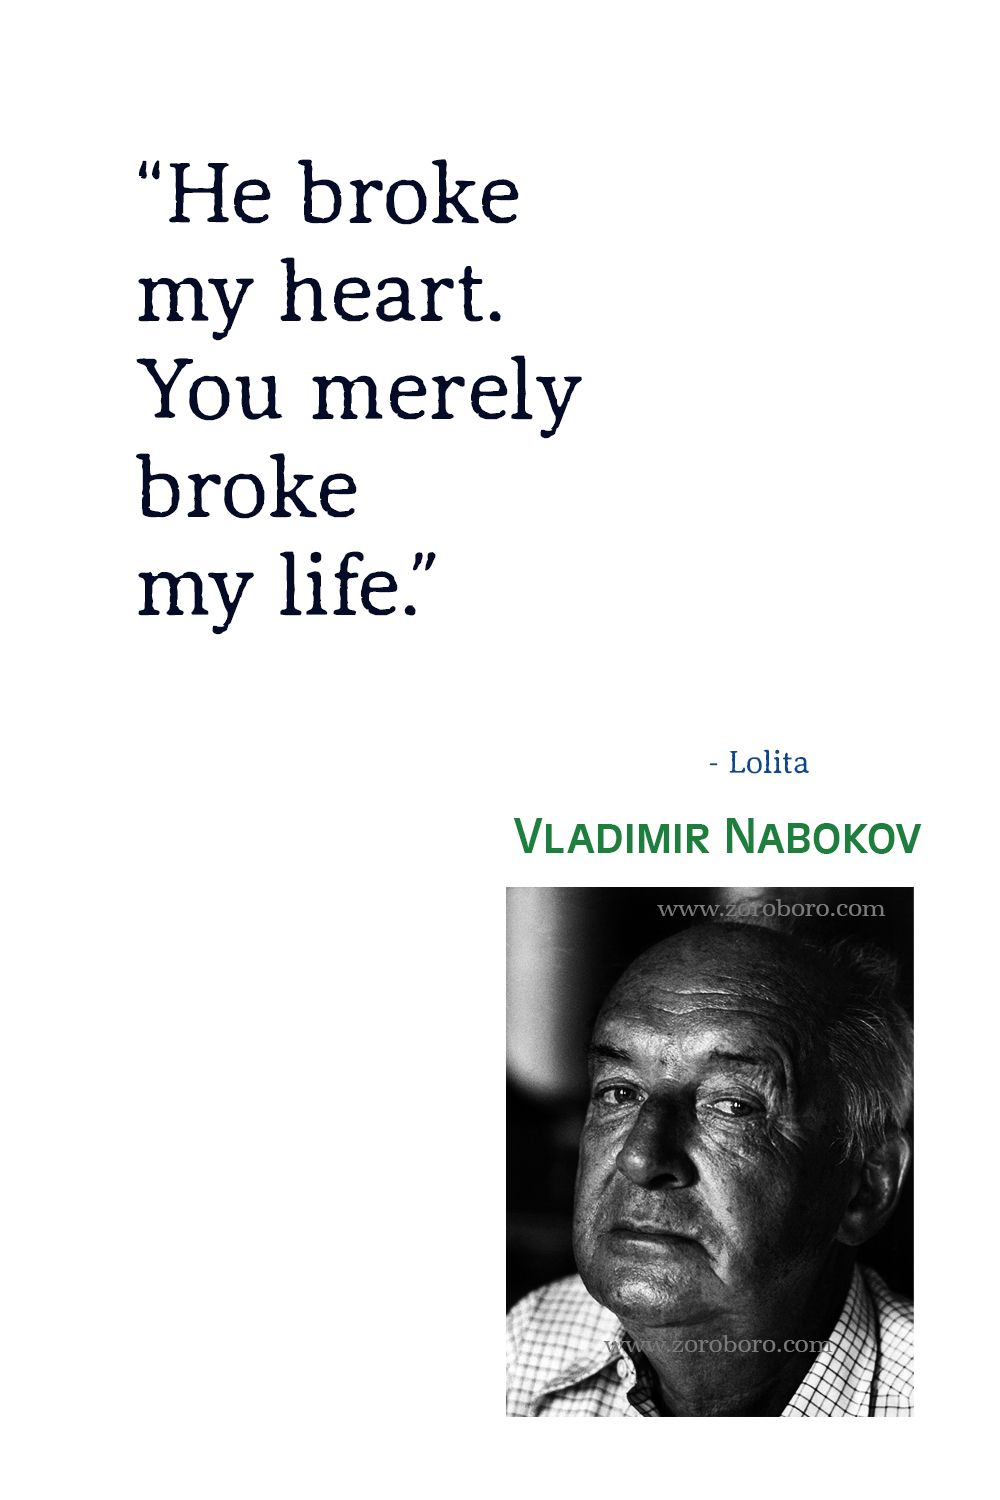 Vladimir Nabokov Quotes, Vladimir Nabokov Lolita Quotes, Vladimir Nabokov Books, Vladimir Nabokov Pale Fire, Vladimir Nabokov Poems, Poetry.